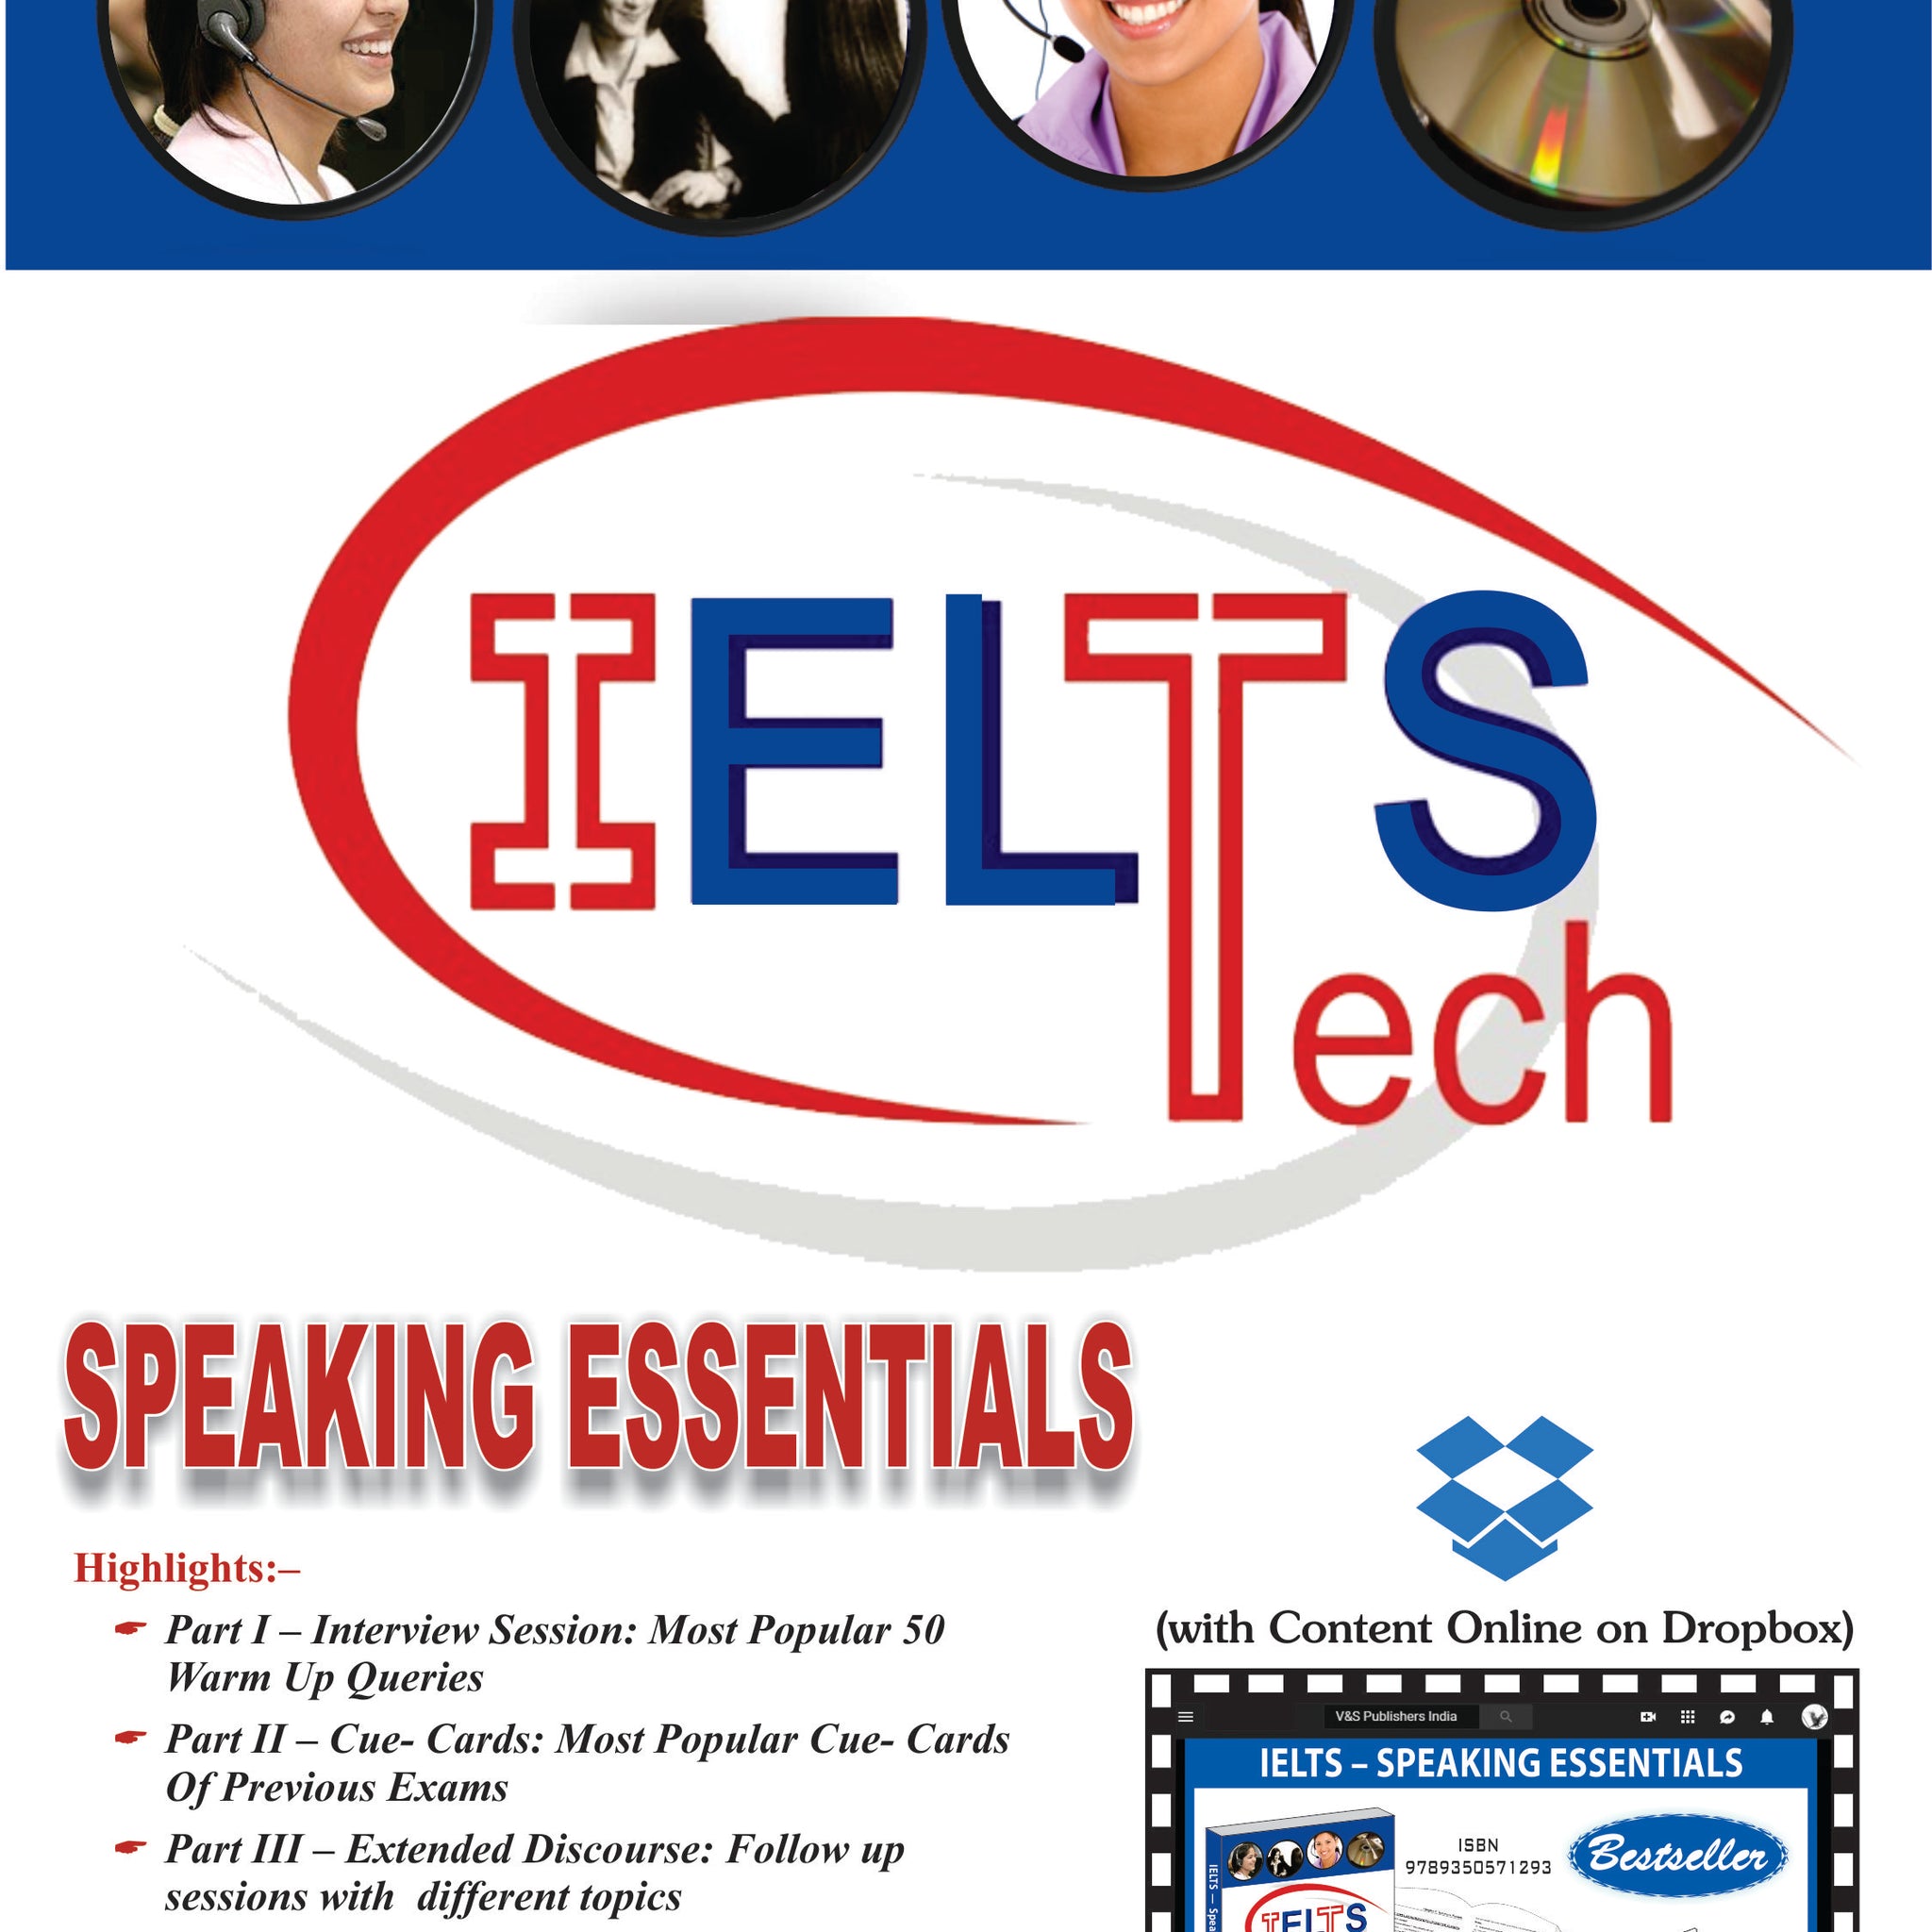 IELTS - Speaking Essentials (With Online Content on Dropbox)